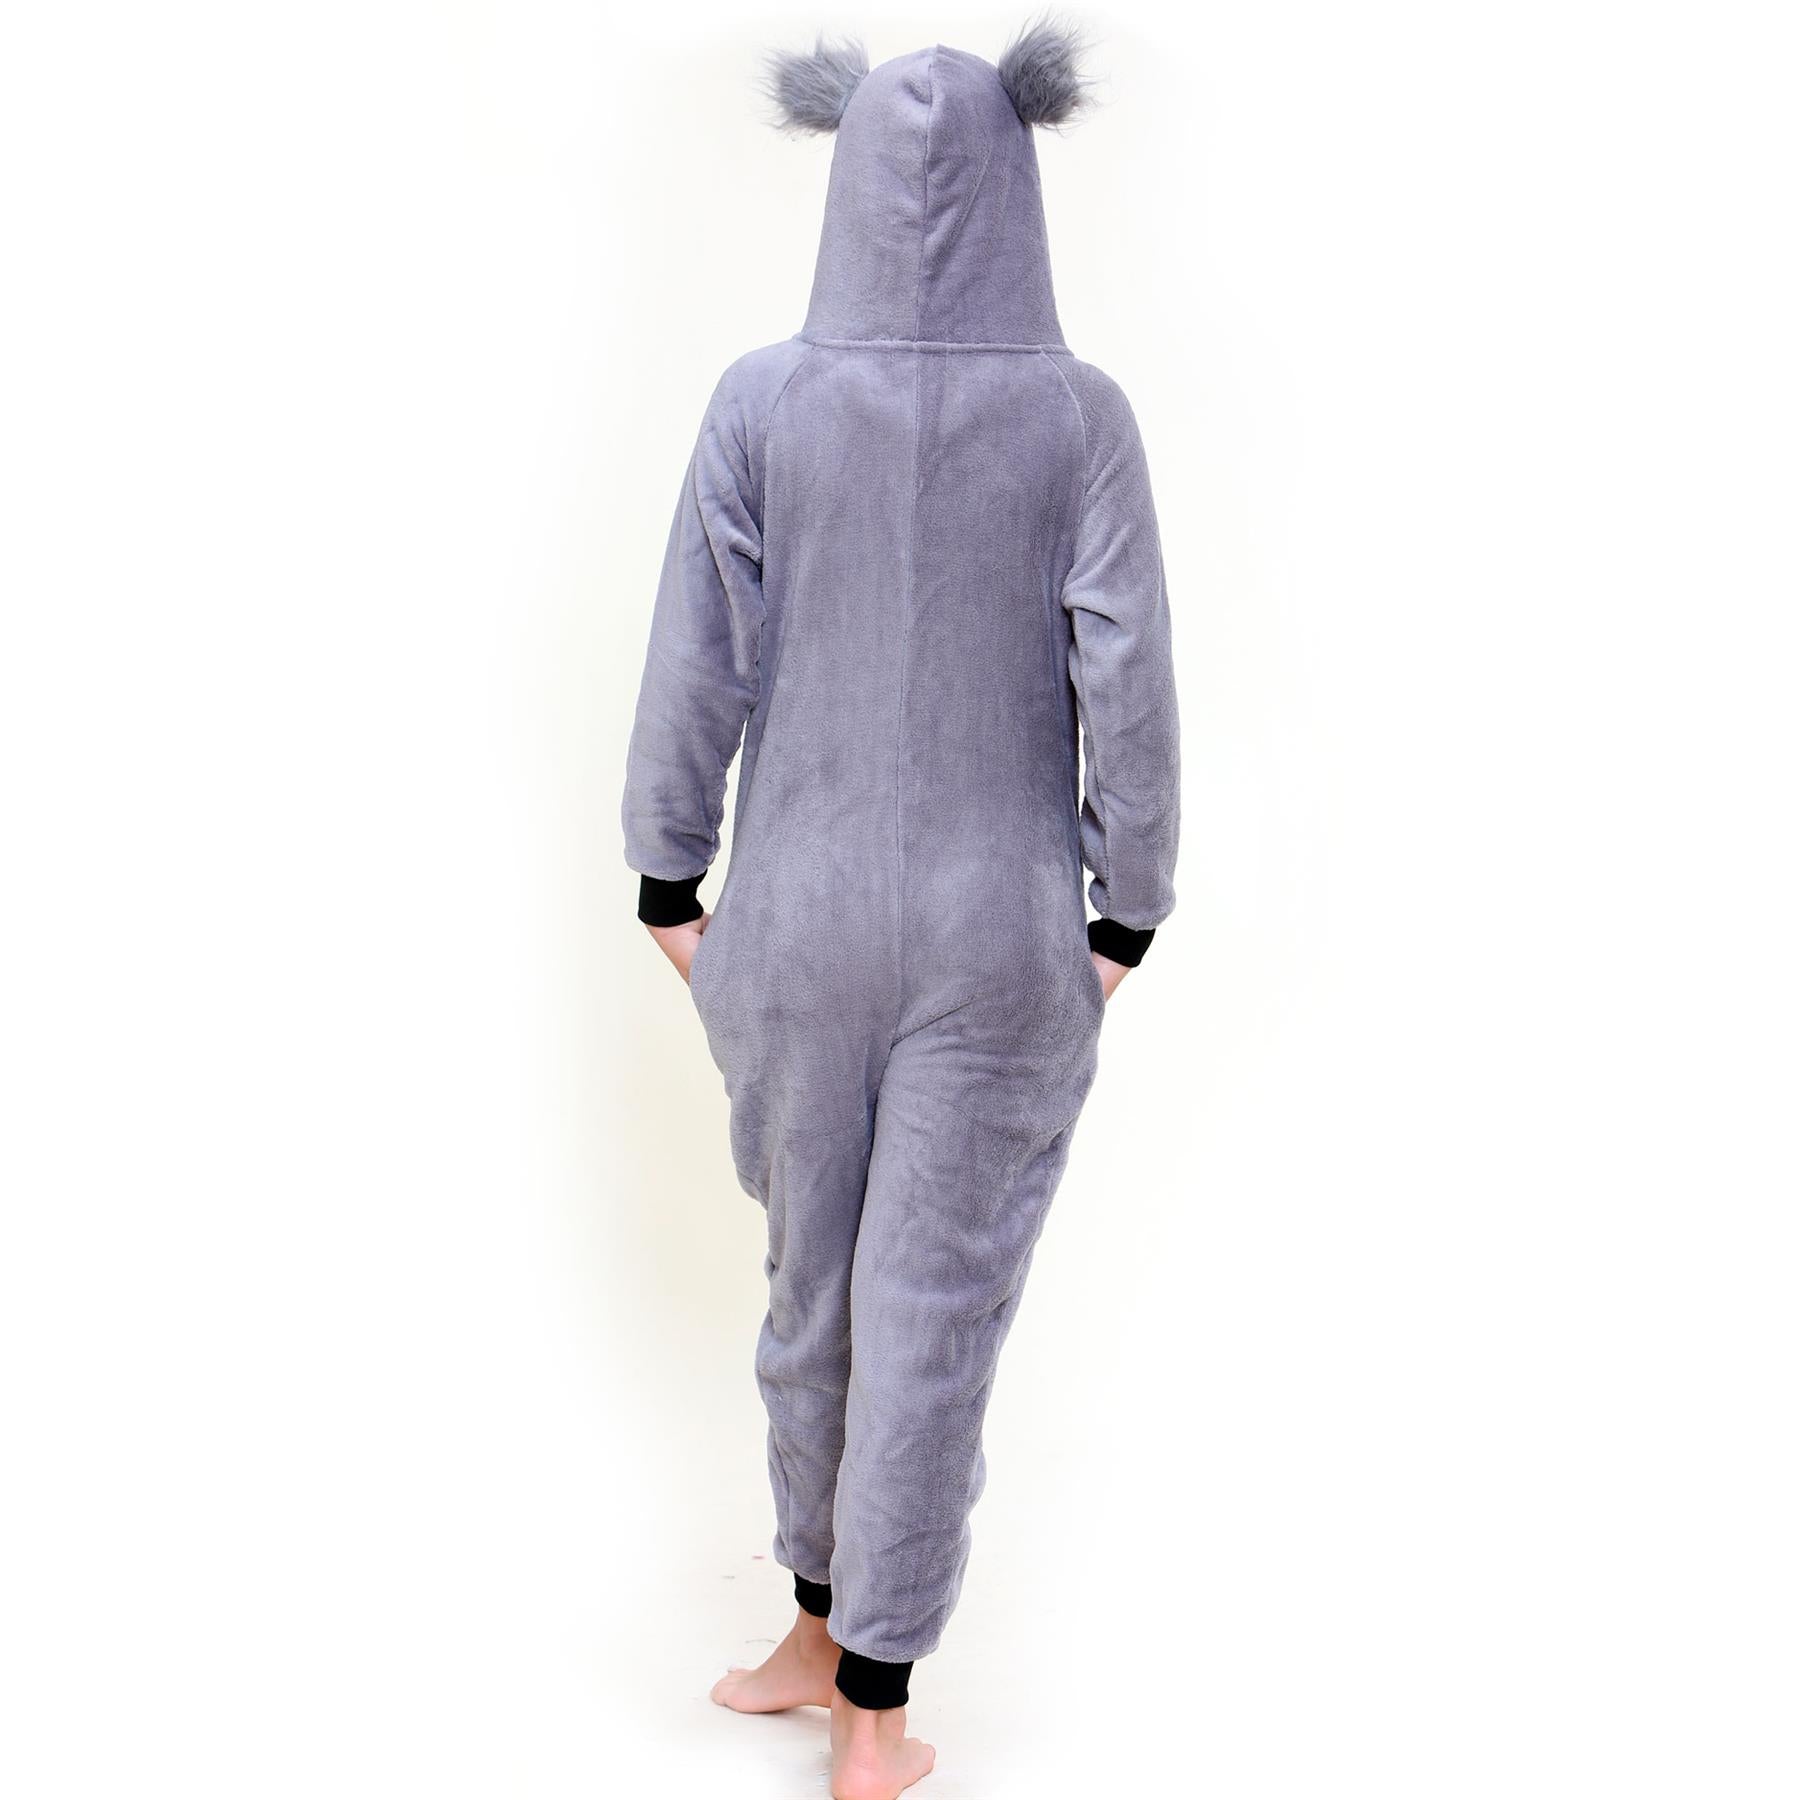 Kids Fleece A2Z Onesie One Piece Jumpsuit Koala Pyjamas World Book Day Costume